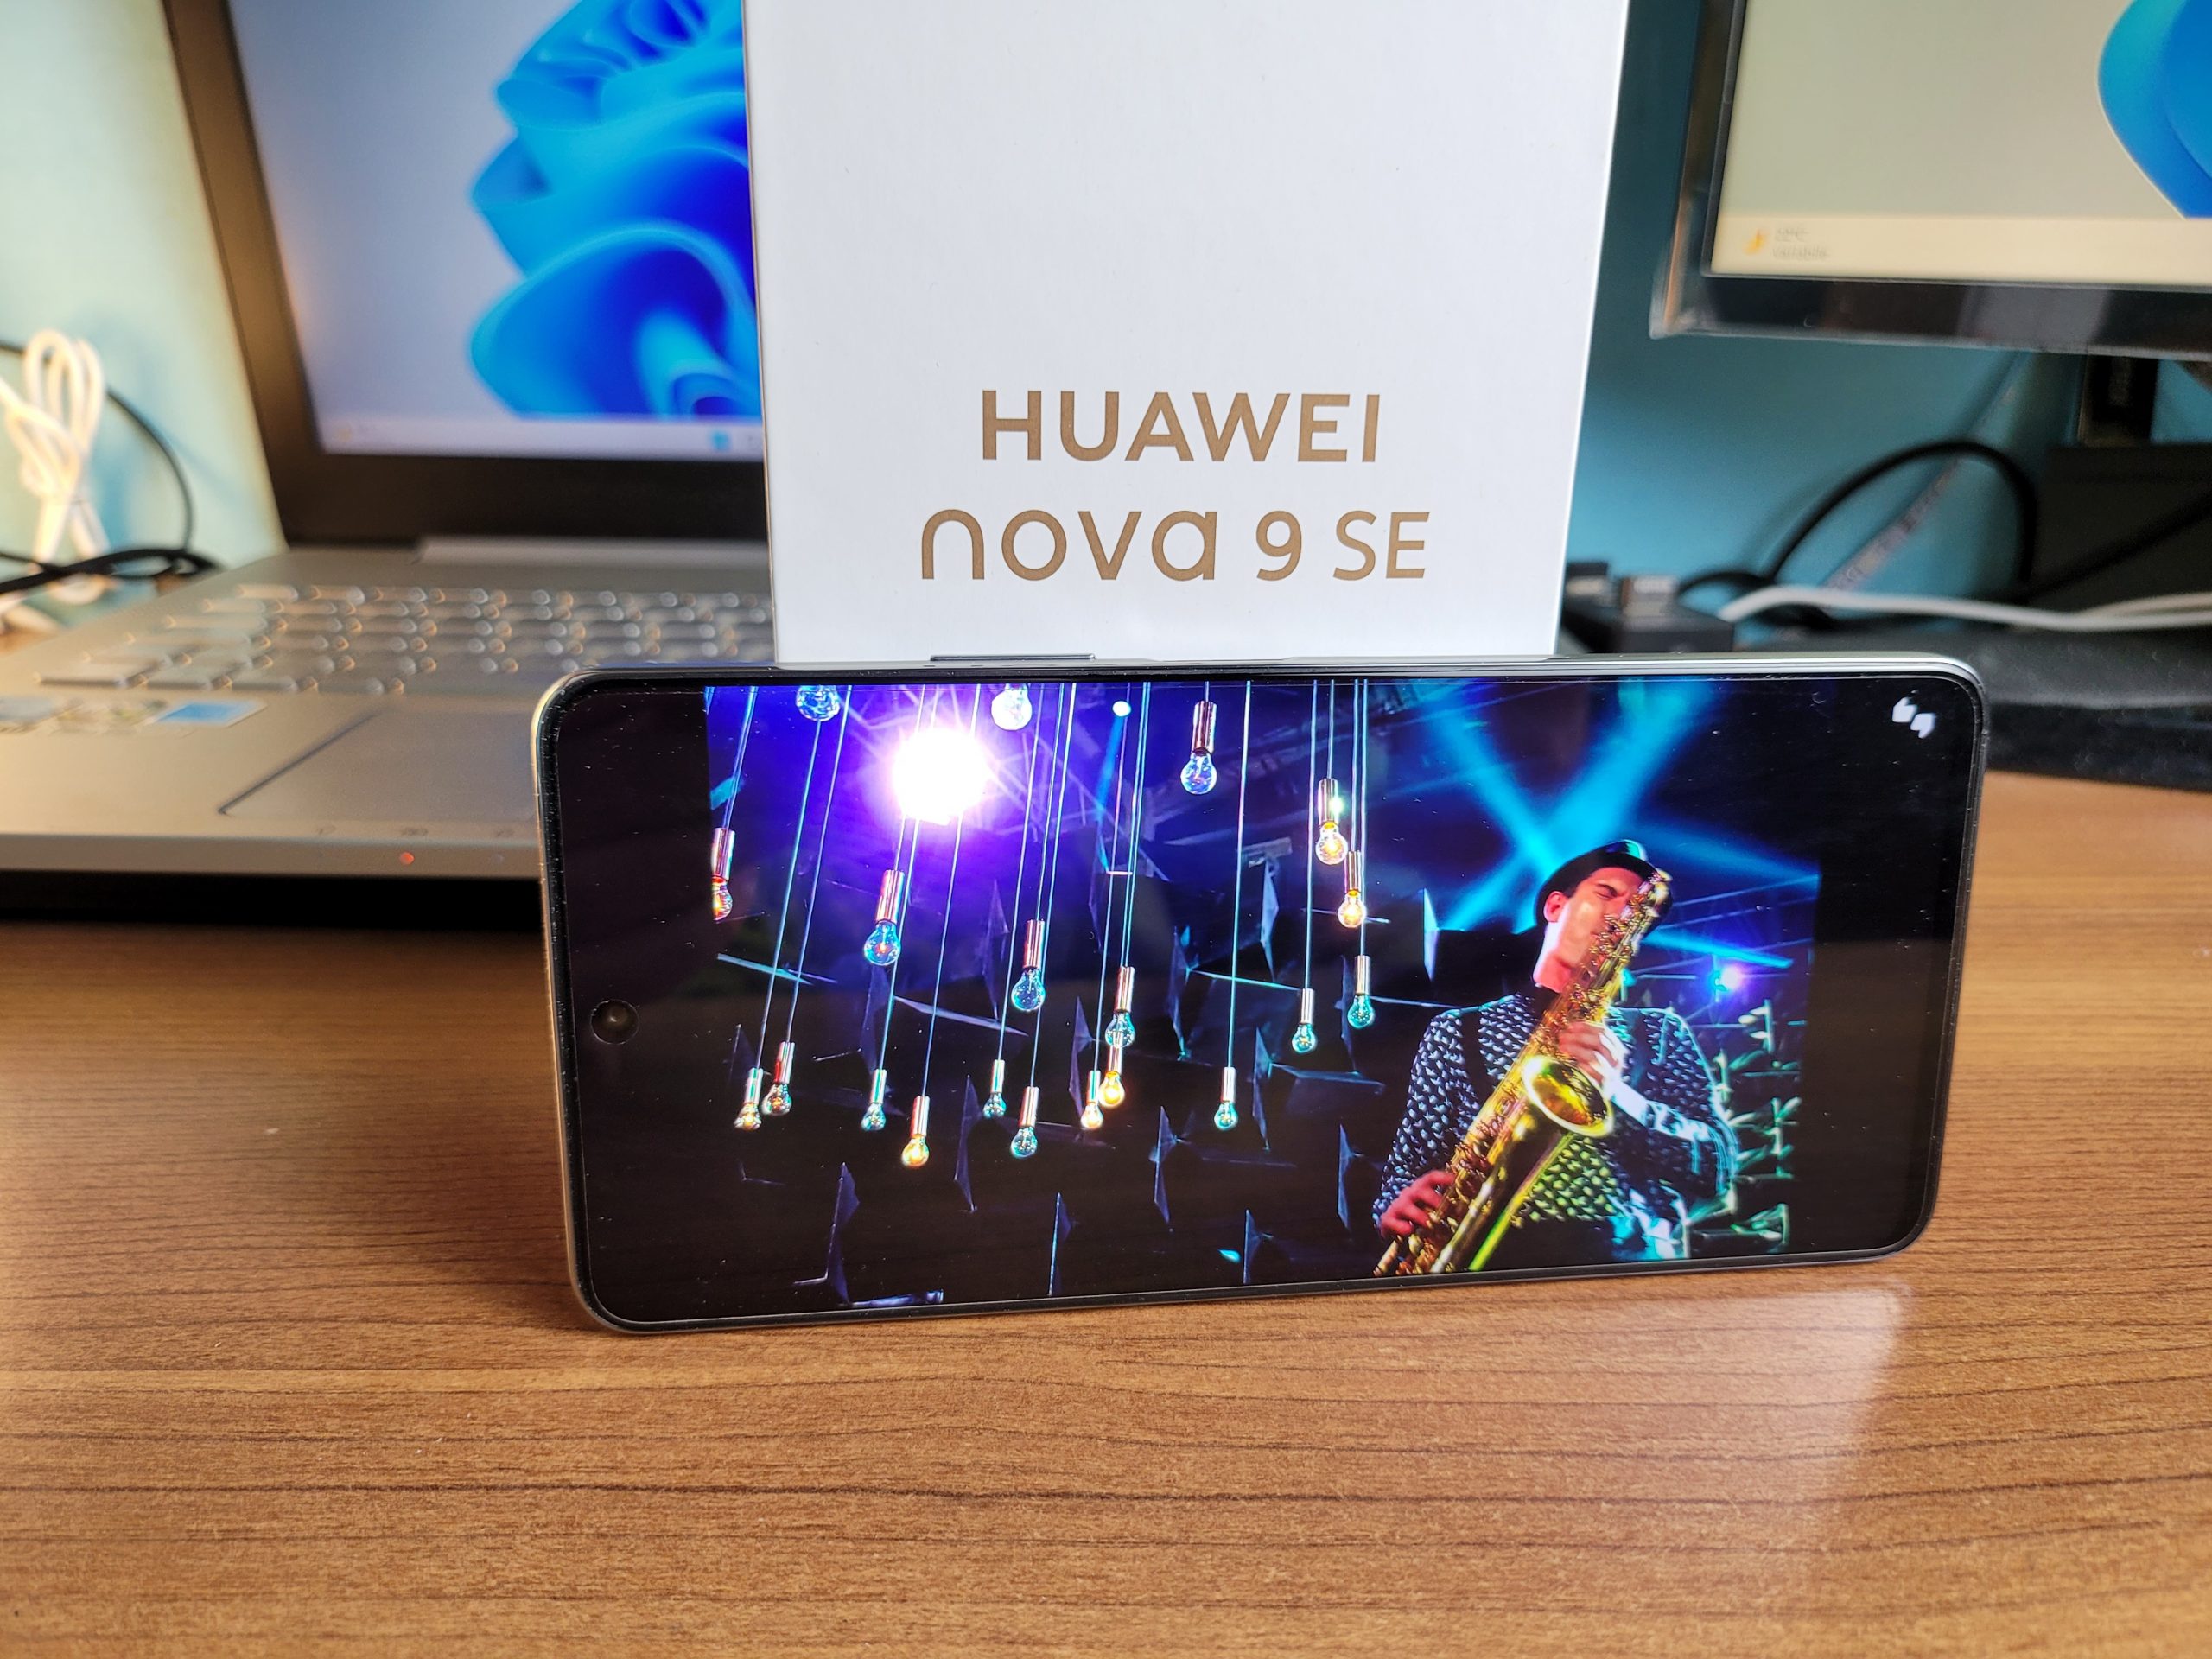 20220513 214935 scaled - Huawei Nova 9 SE recensione